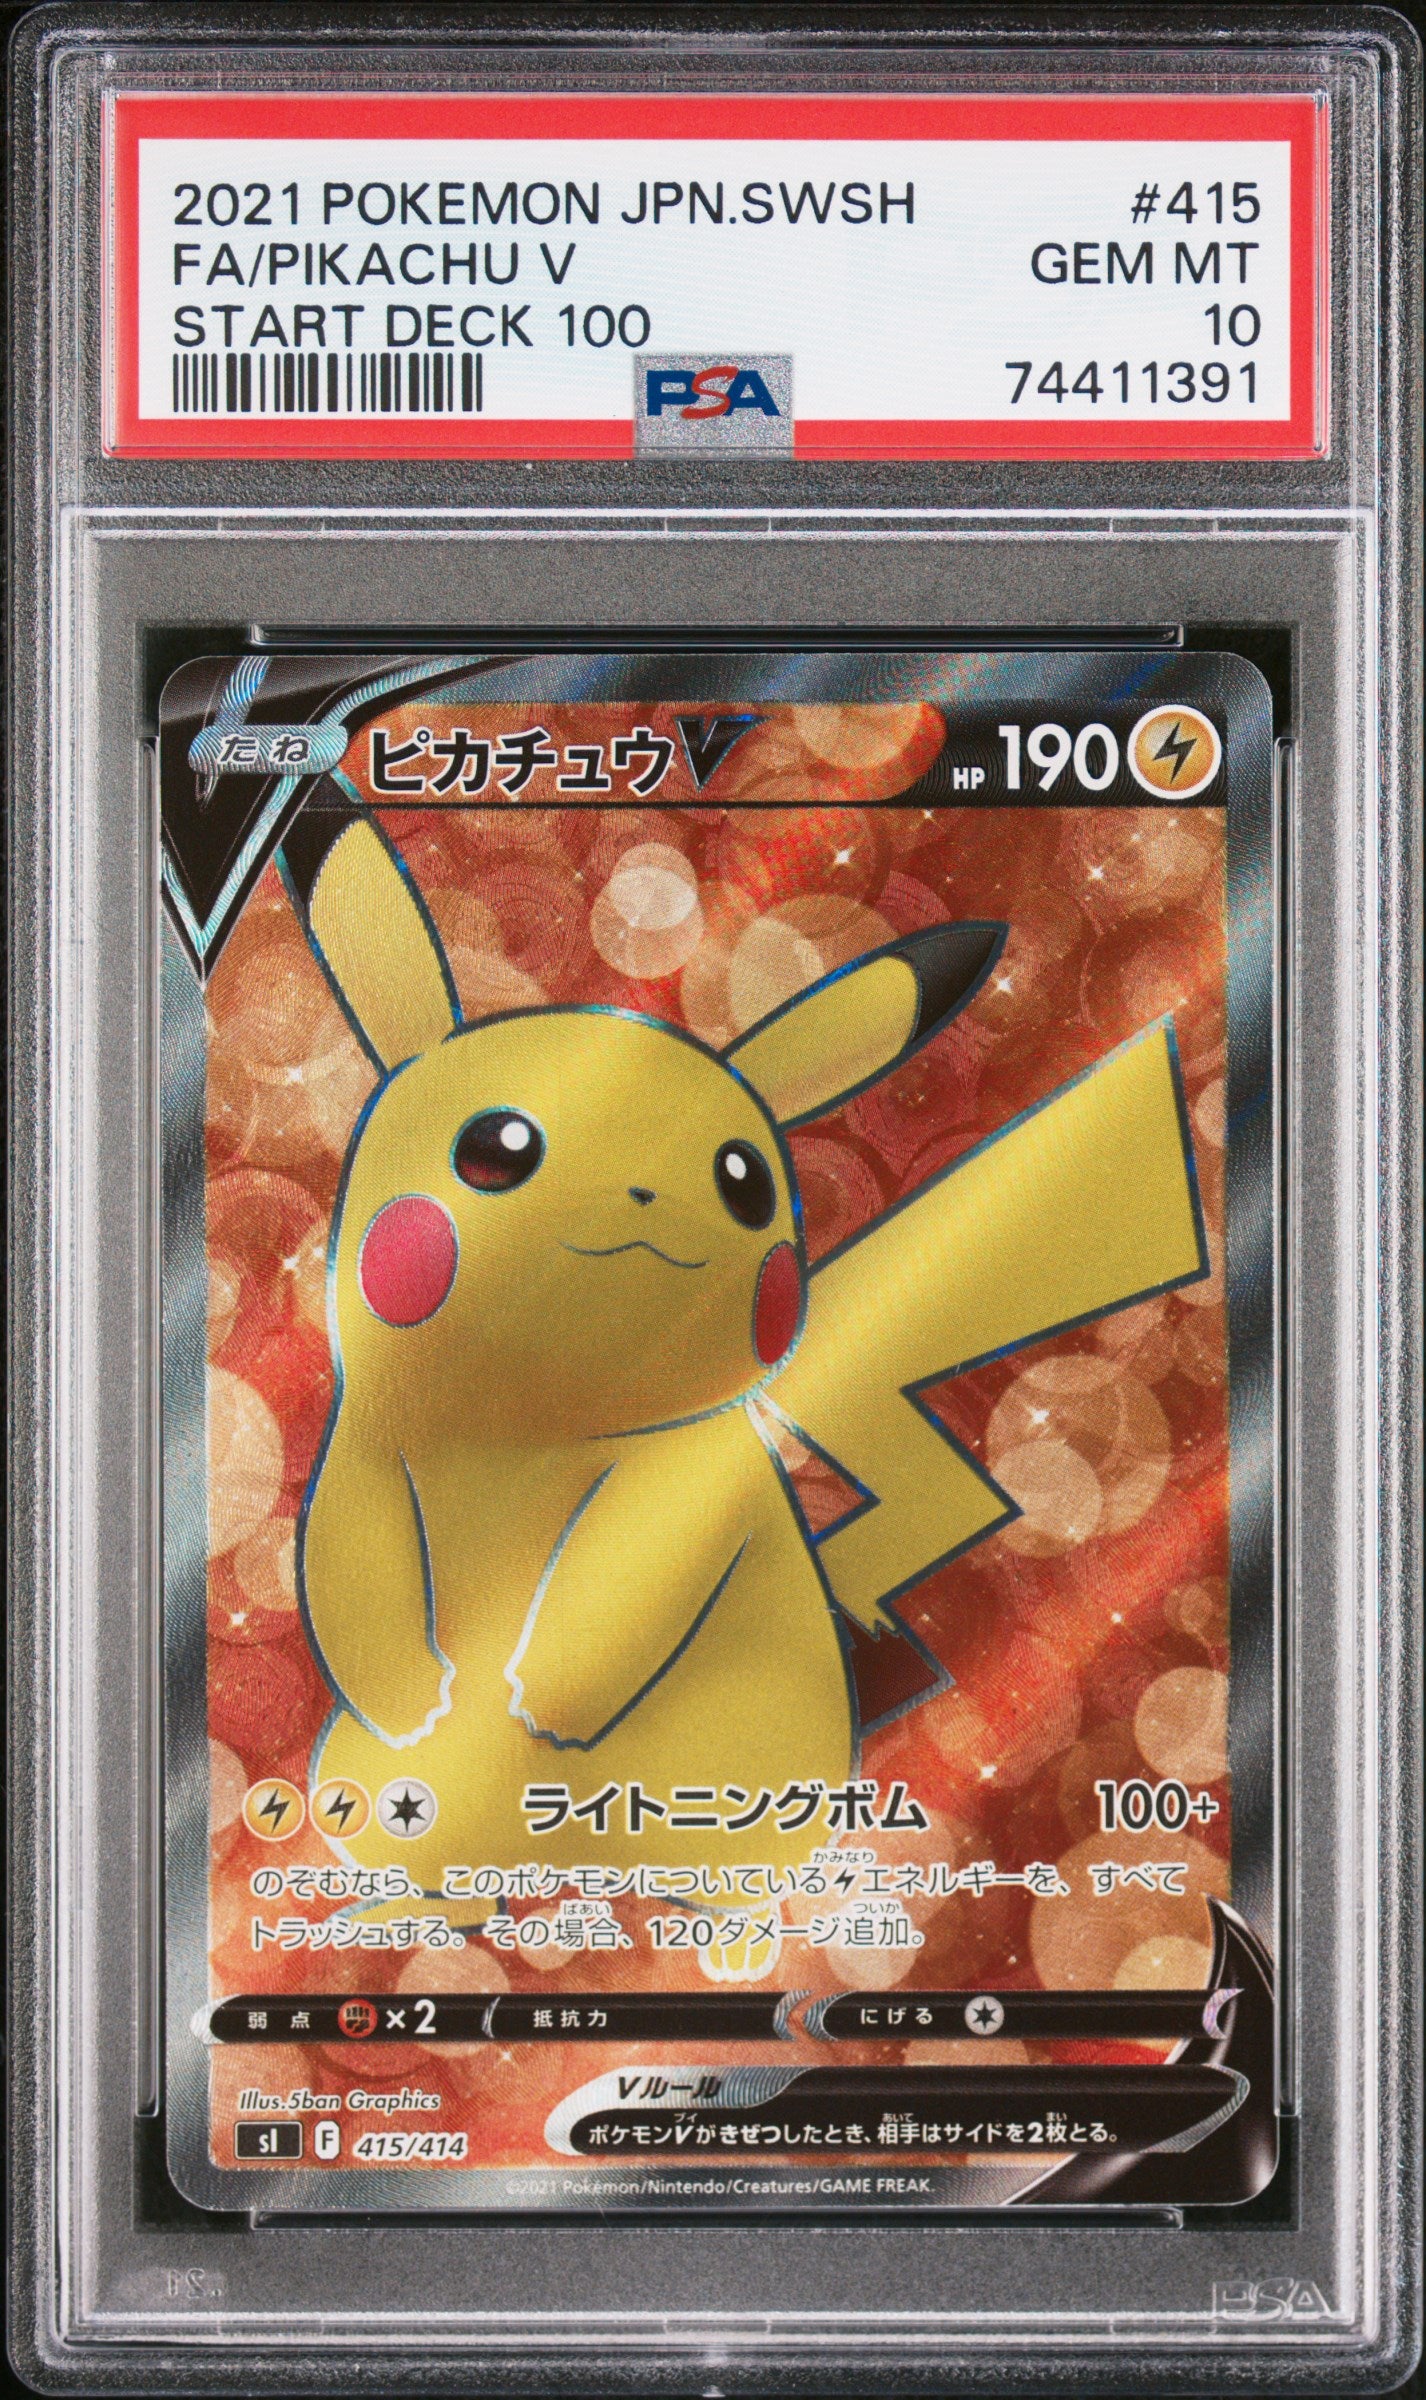 PSA 10 - Pikachu V 415/414 sl Start Deck 100 - Pokemon